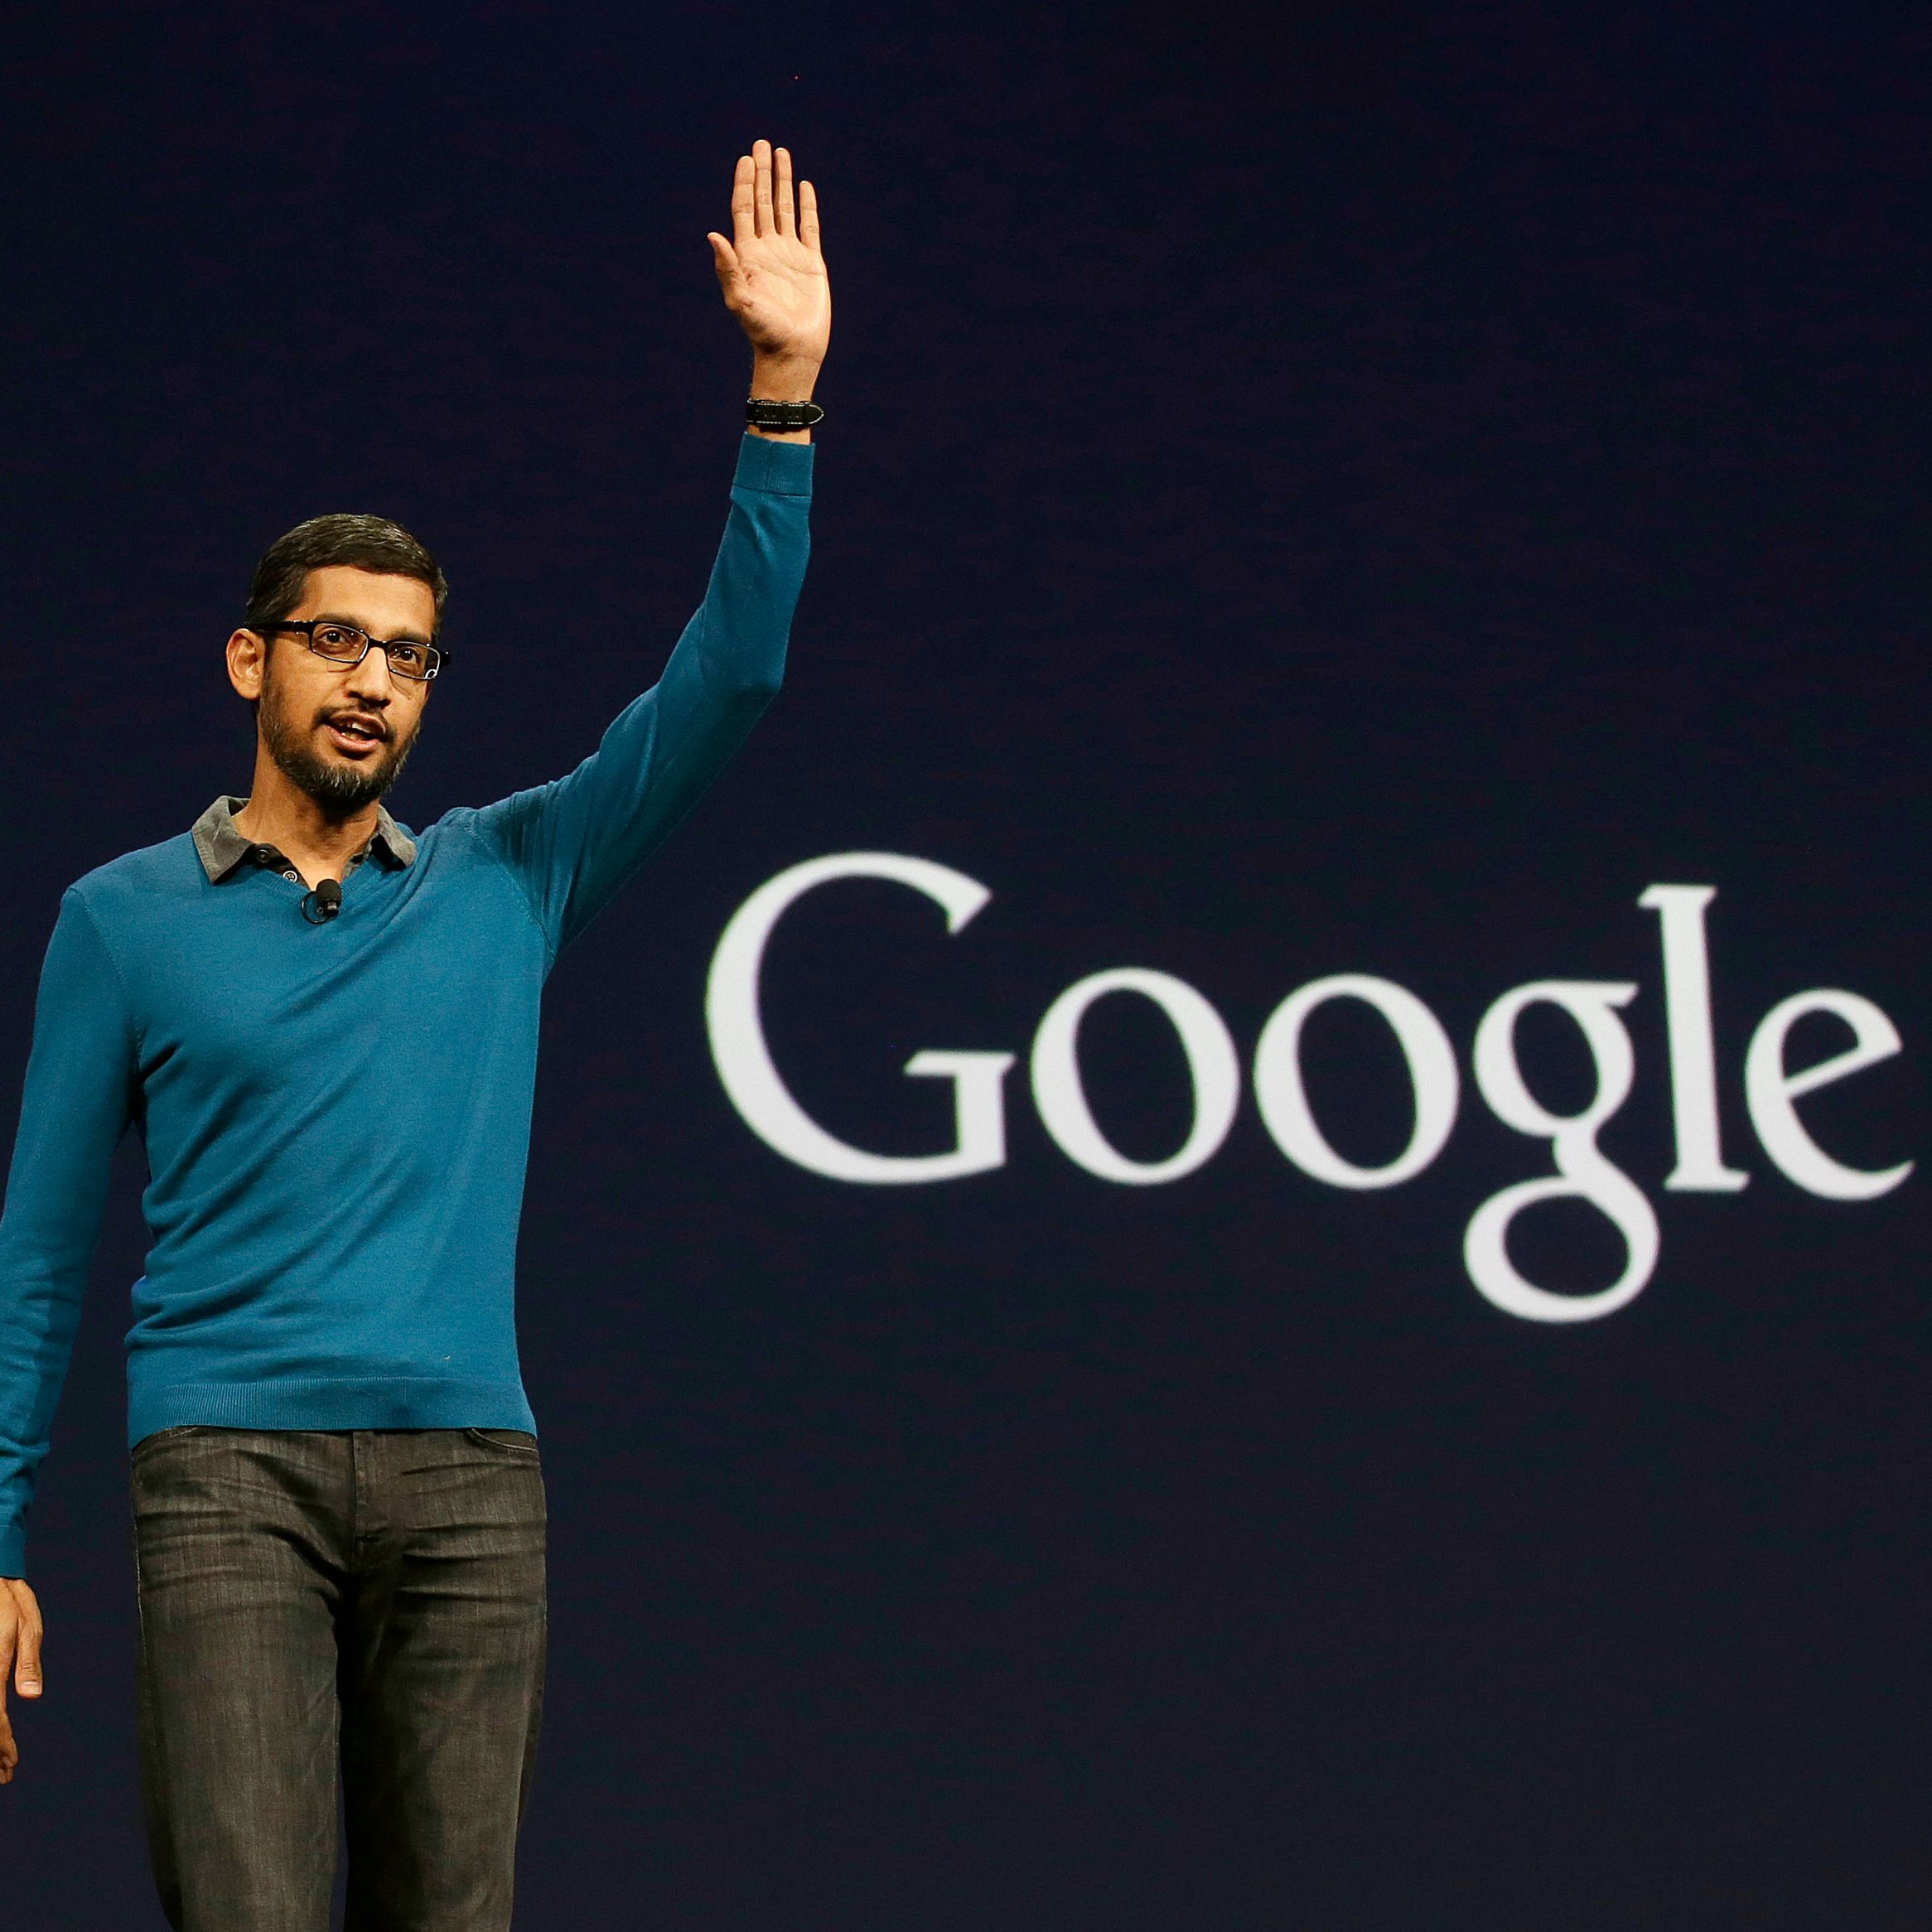 New Google CEO Sundar Pichai shows gratitude for all the wishes received